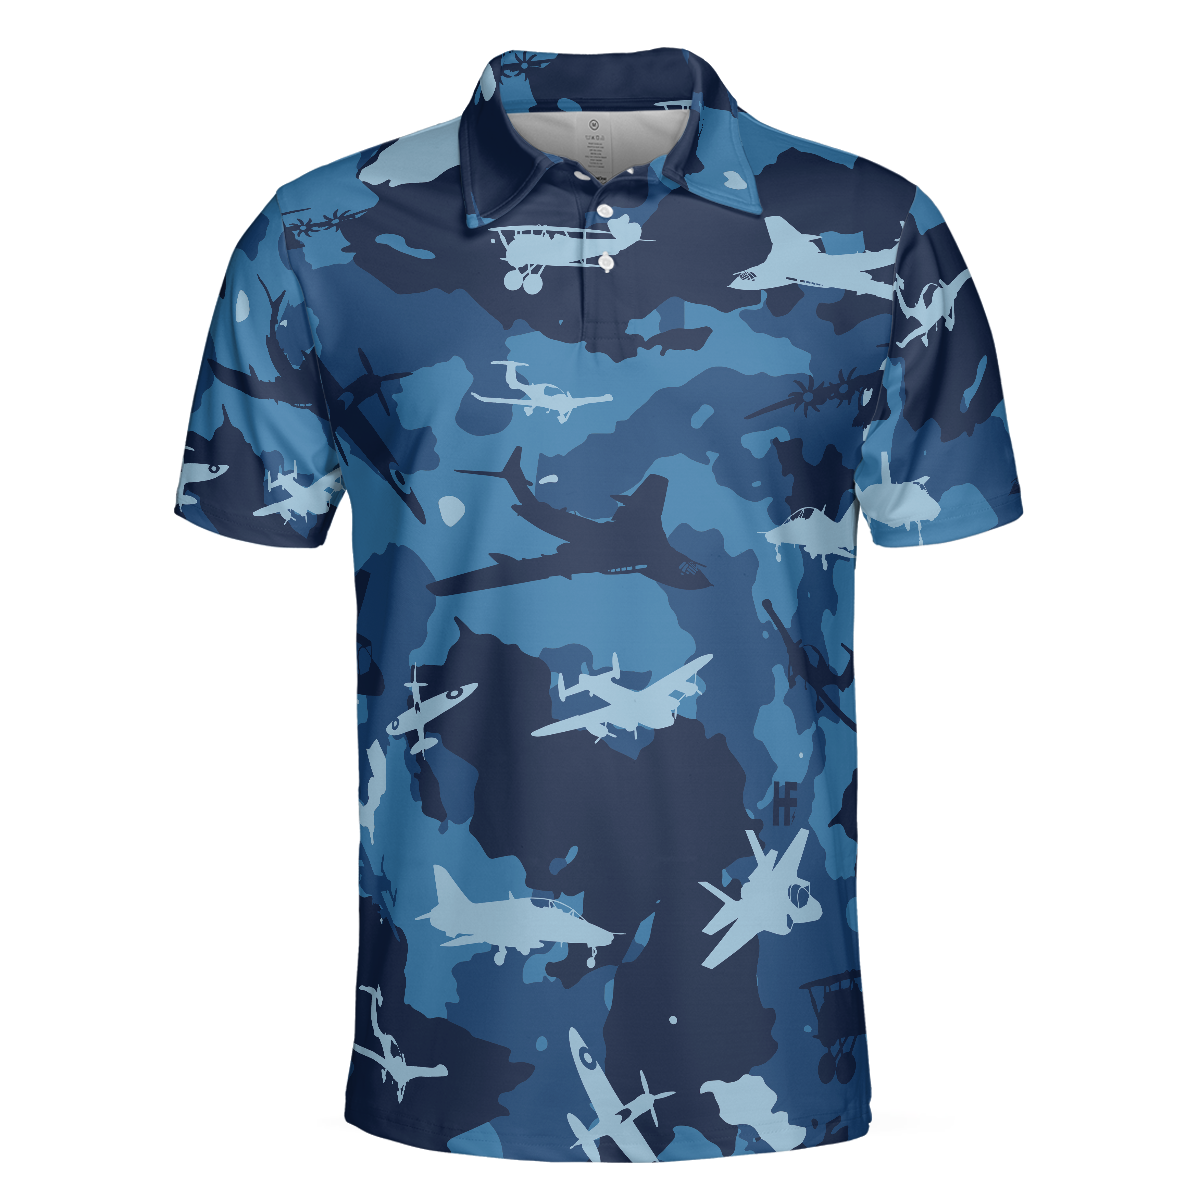 Aircraft Ocean Blue Camouflage Short Sleeve Army Polo Shirt